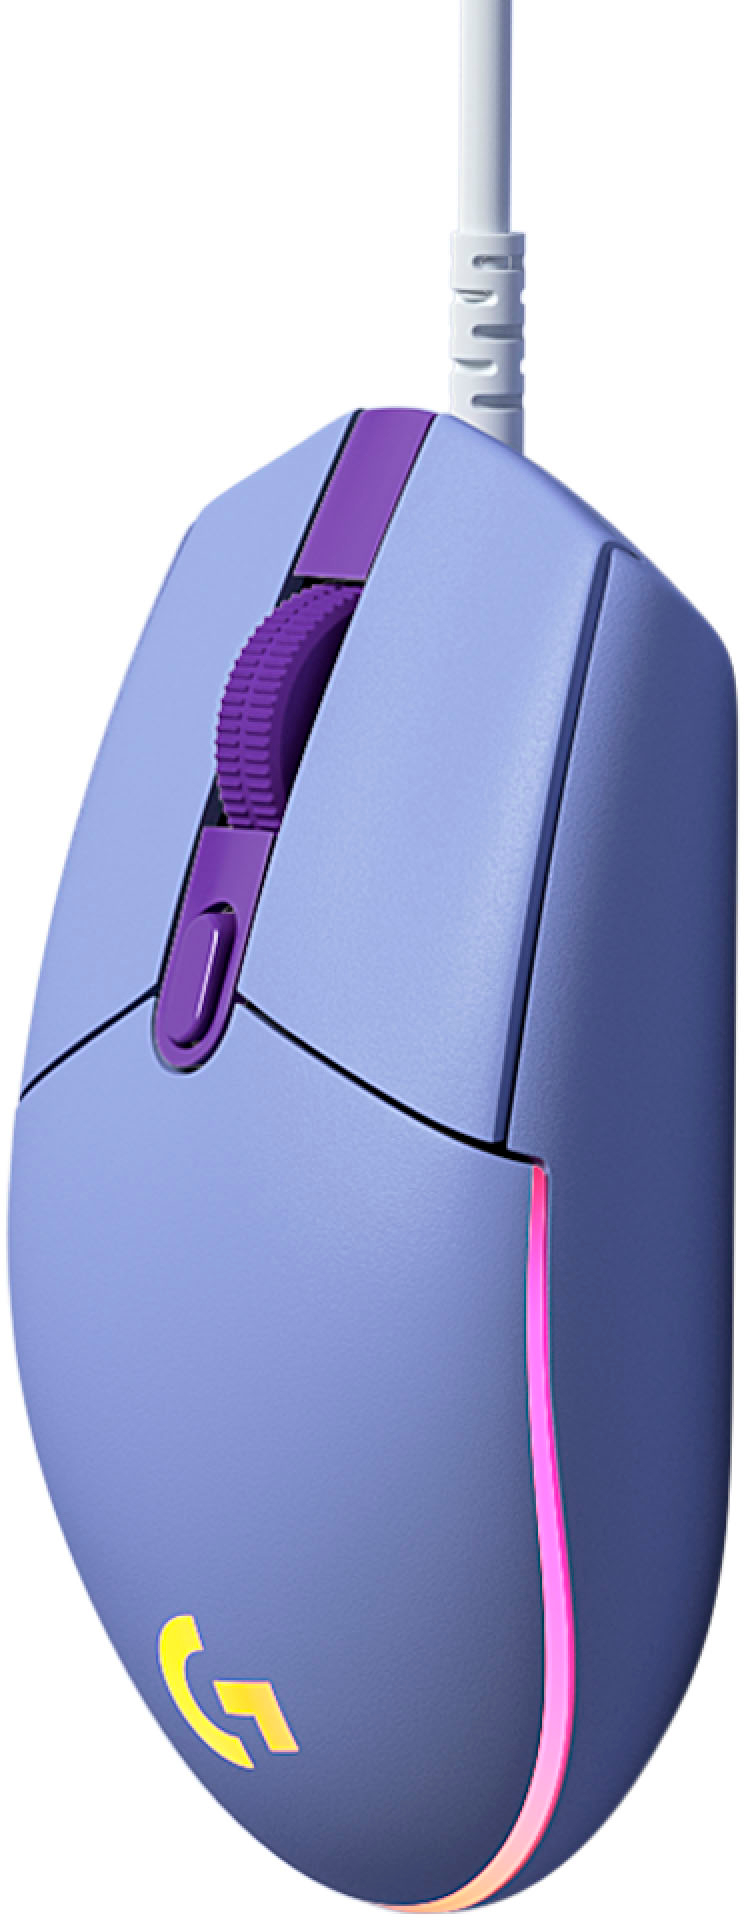 NIB~ Logitech G203 LIGHTSYNC Gaming Mouse - purple